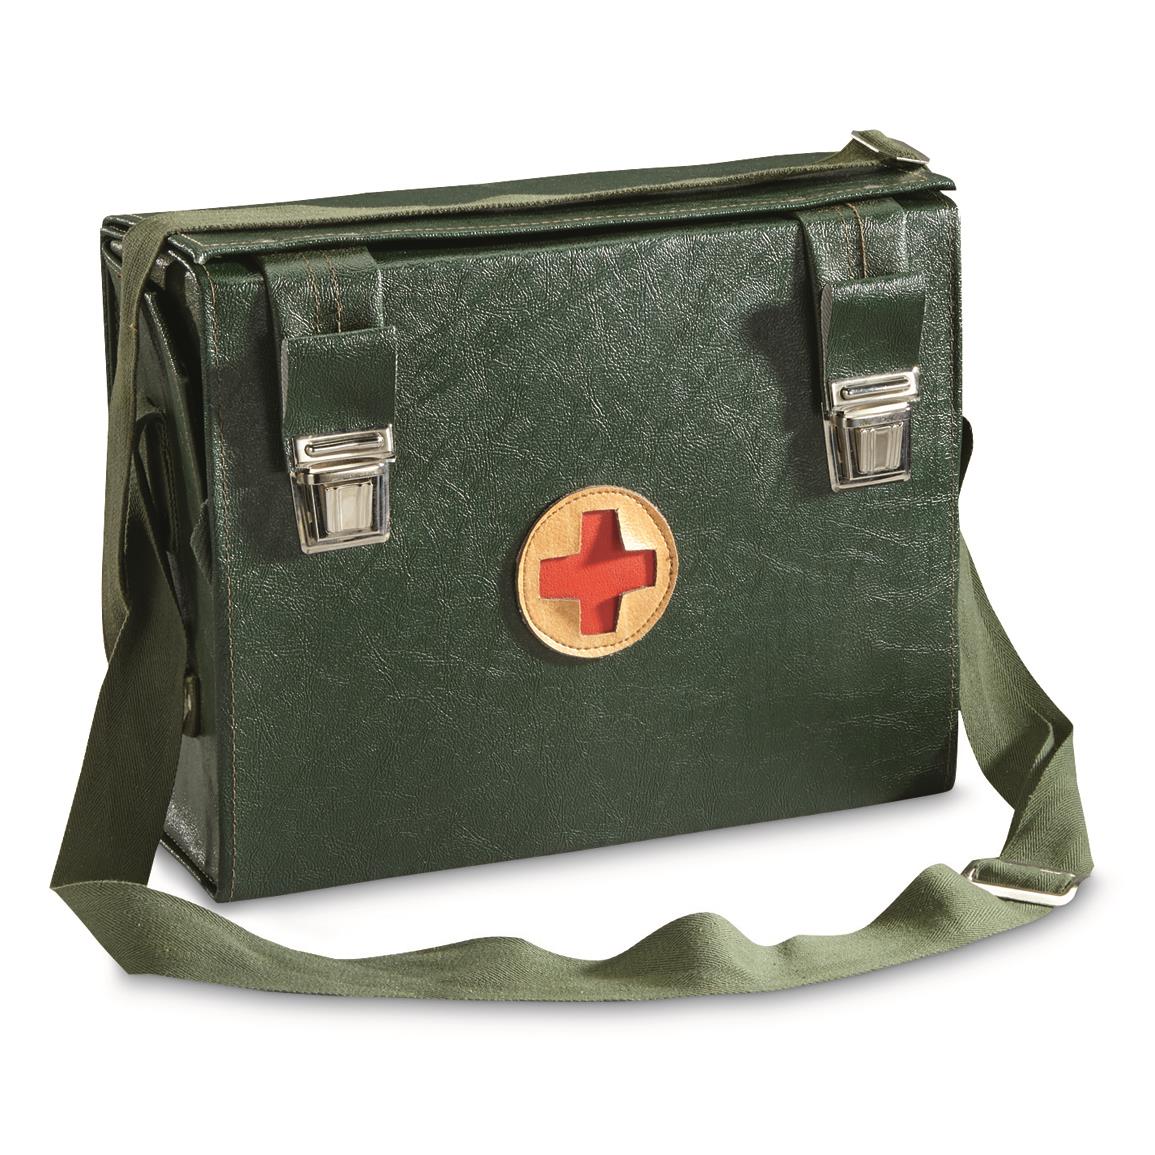 Bulgarian Military First Aid Box Shoulder Bag Like New